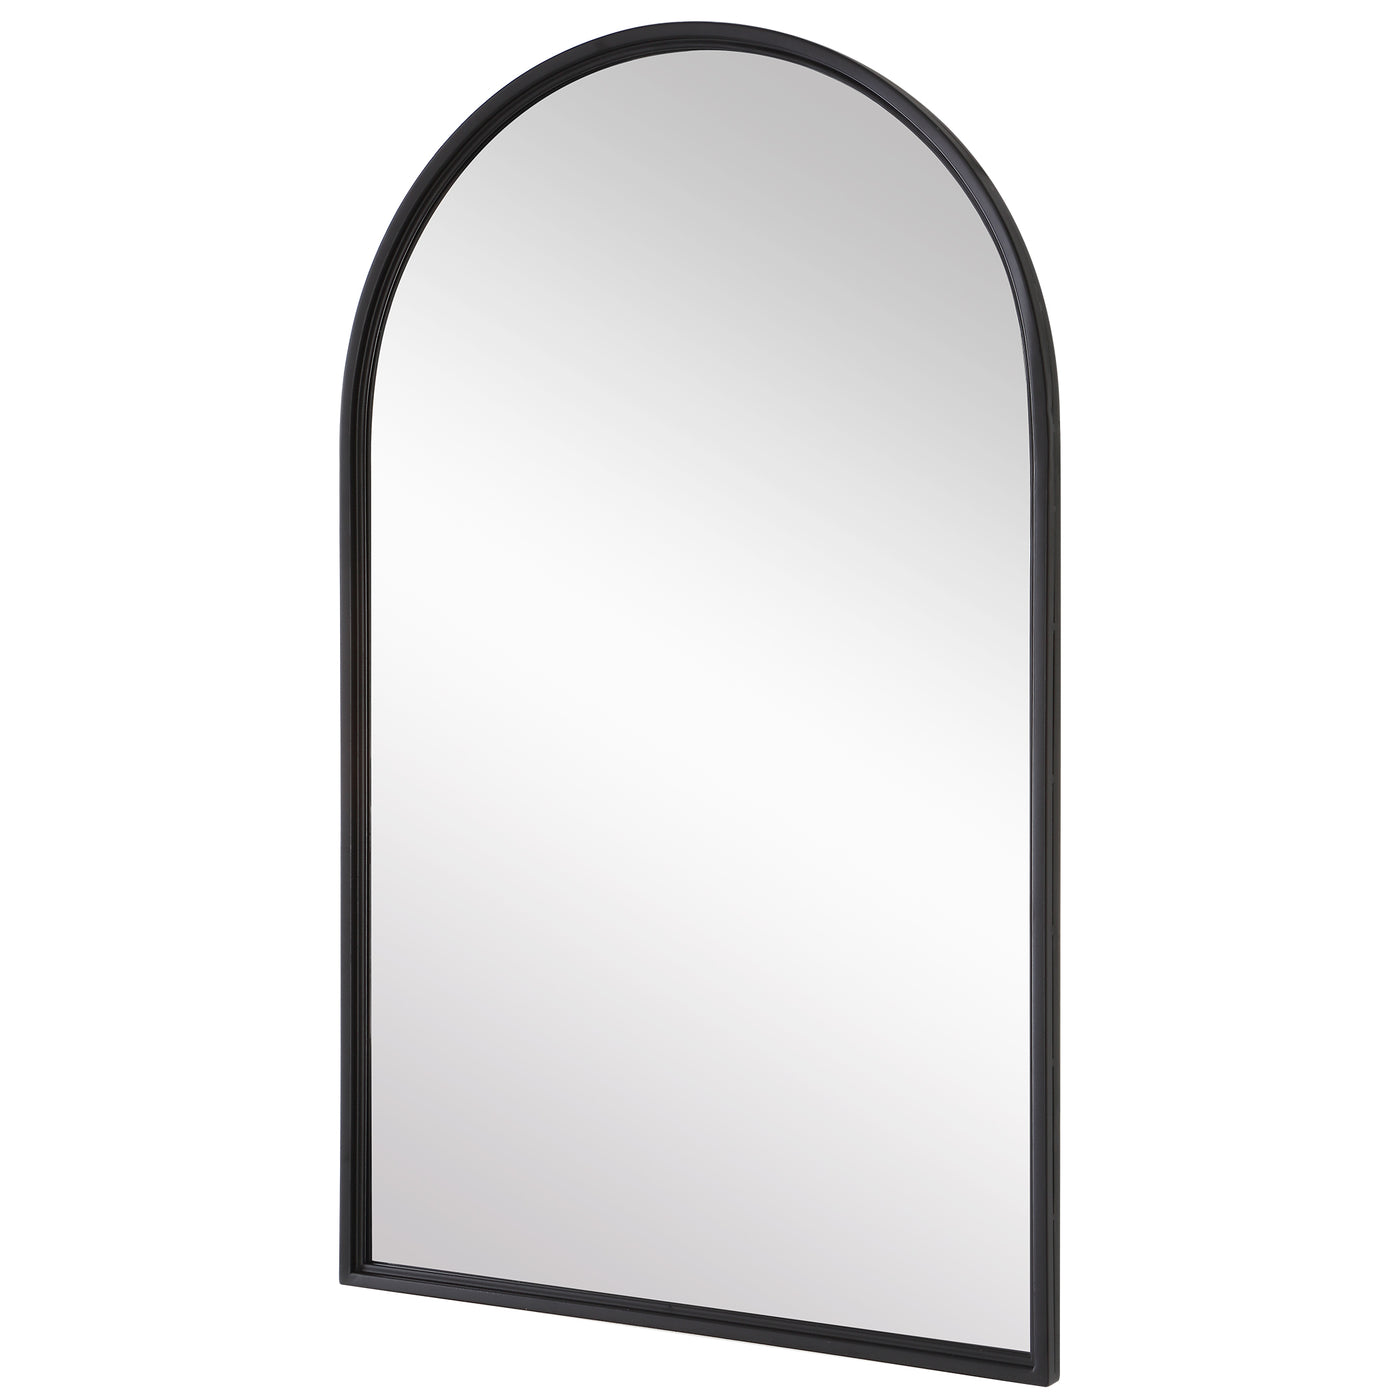 The Bisbee - Arched Top Matte Black Framed Mirror